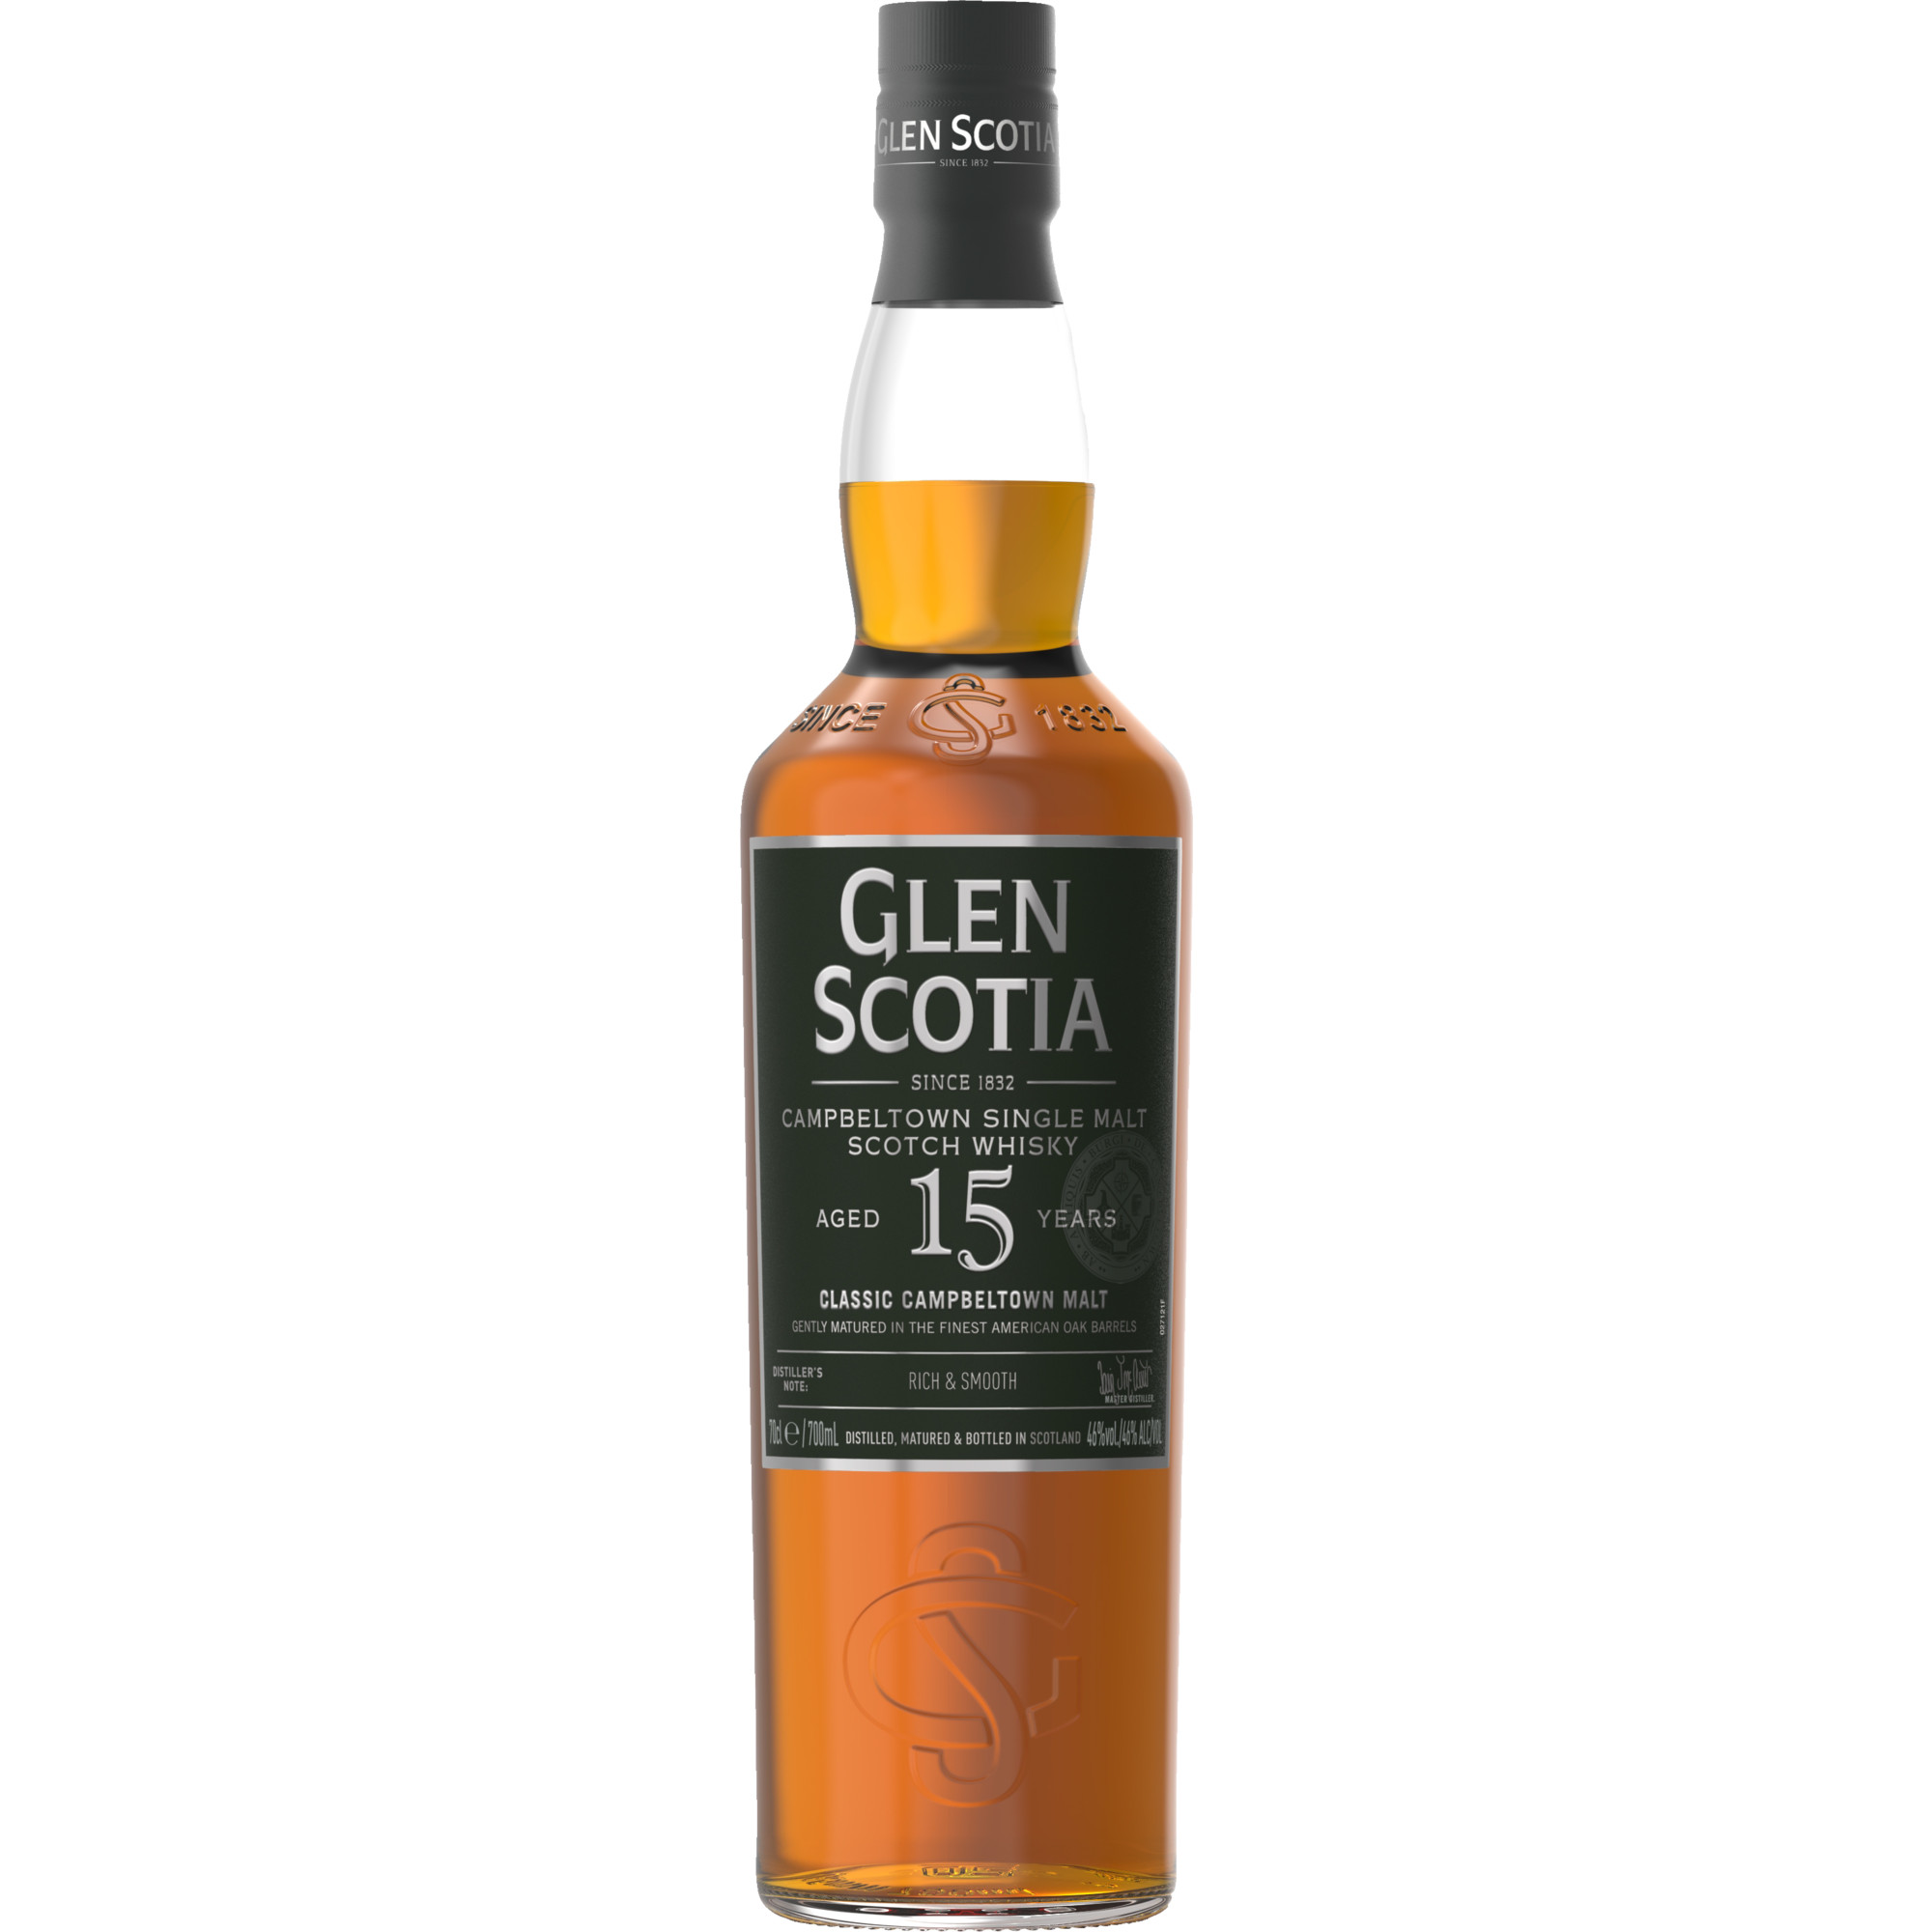 Glen Scotia 15 Years Single Malt Whisky, American Oak Barrels, Schottland, 0,7 L, 46% Vol., Schottland, Spirituosen